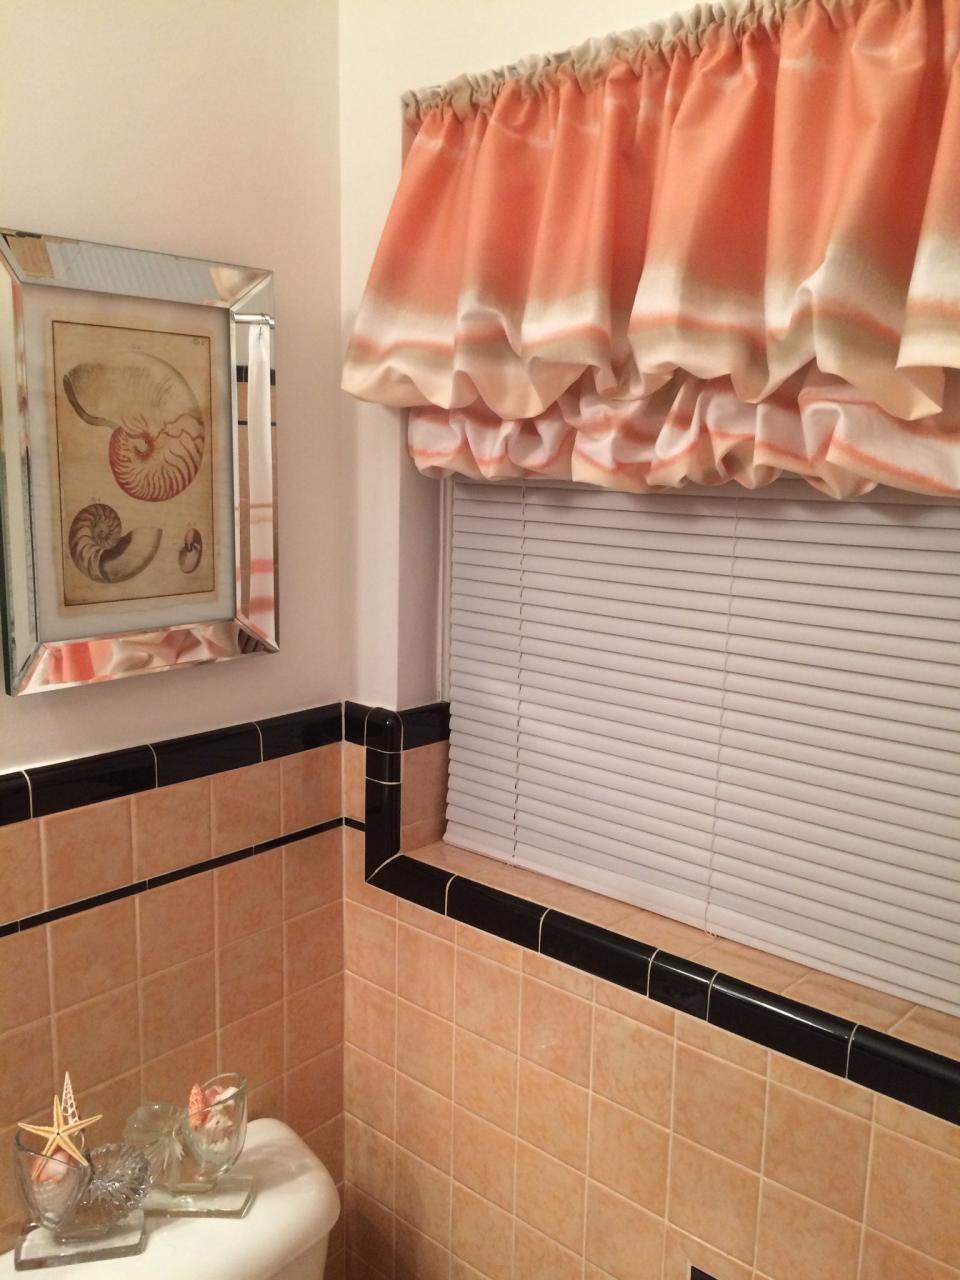 My 1937 peach tiled bathroom. Work in progress. Peach bathroom